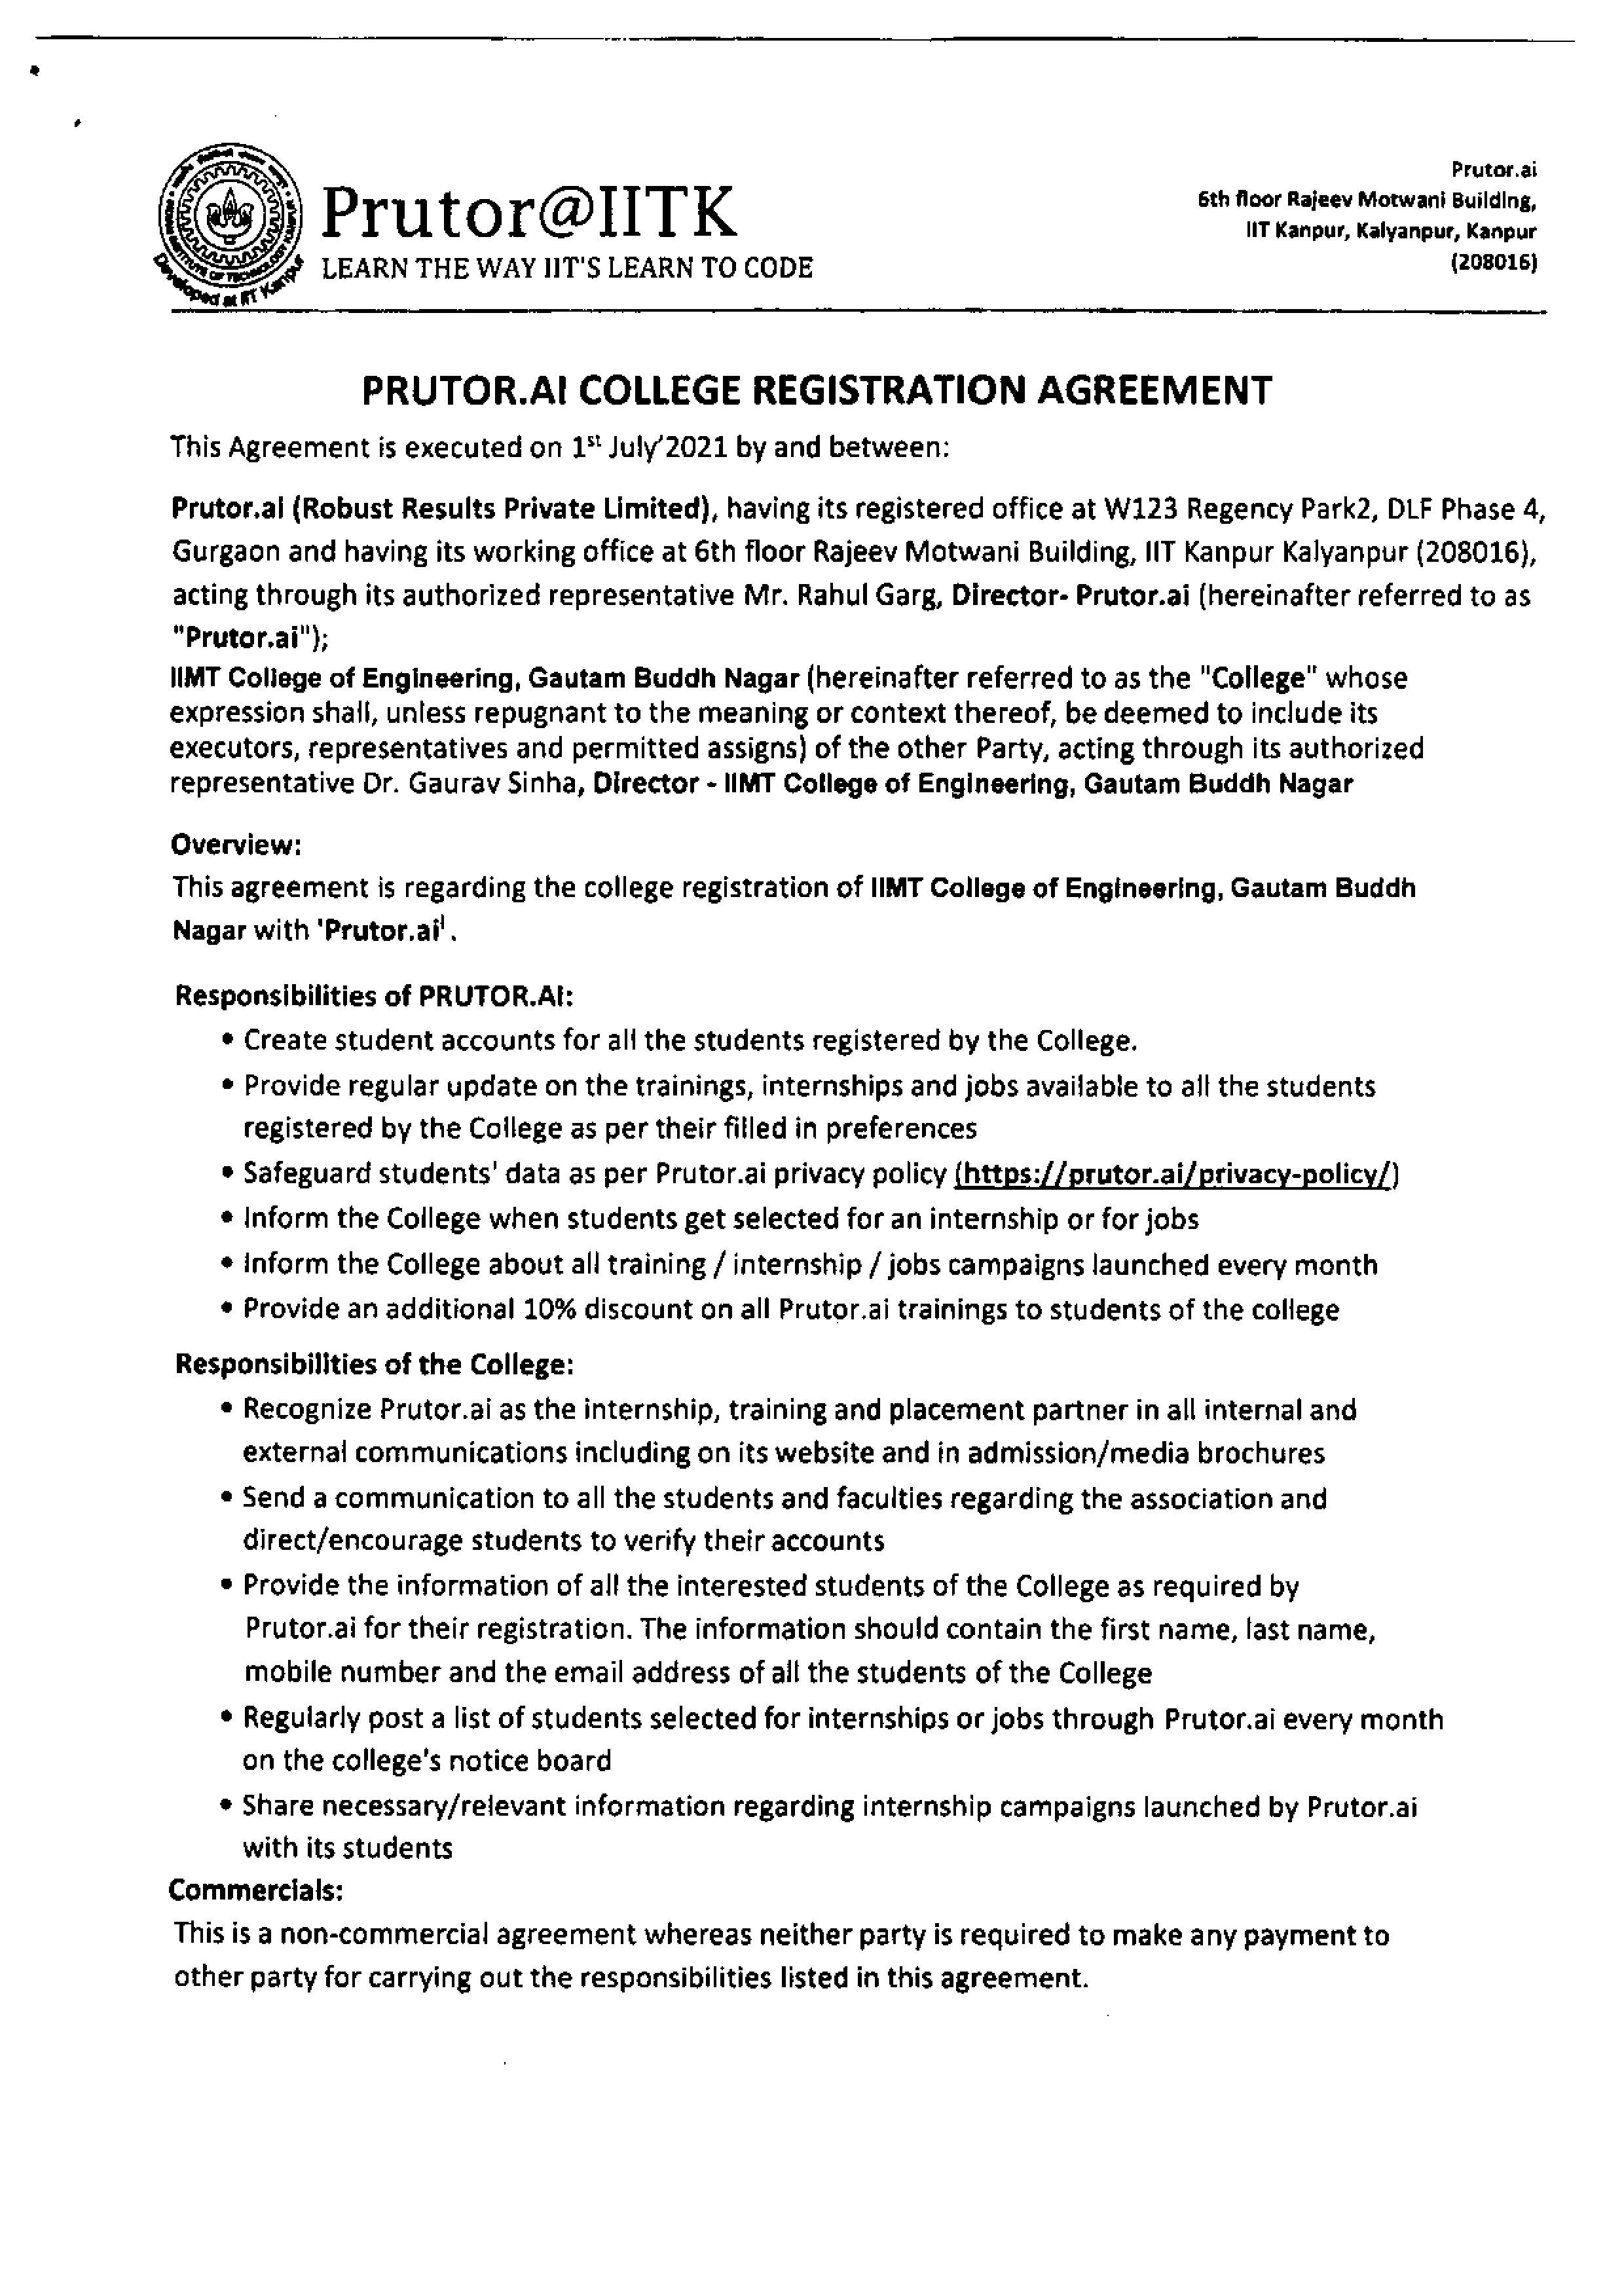 Agreement between Prutor@IITK & IIMT College of Engineering